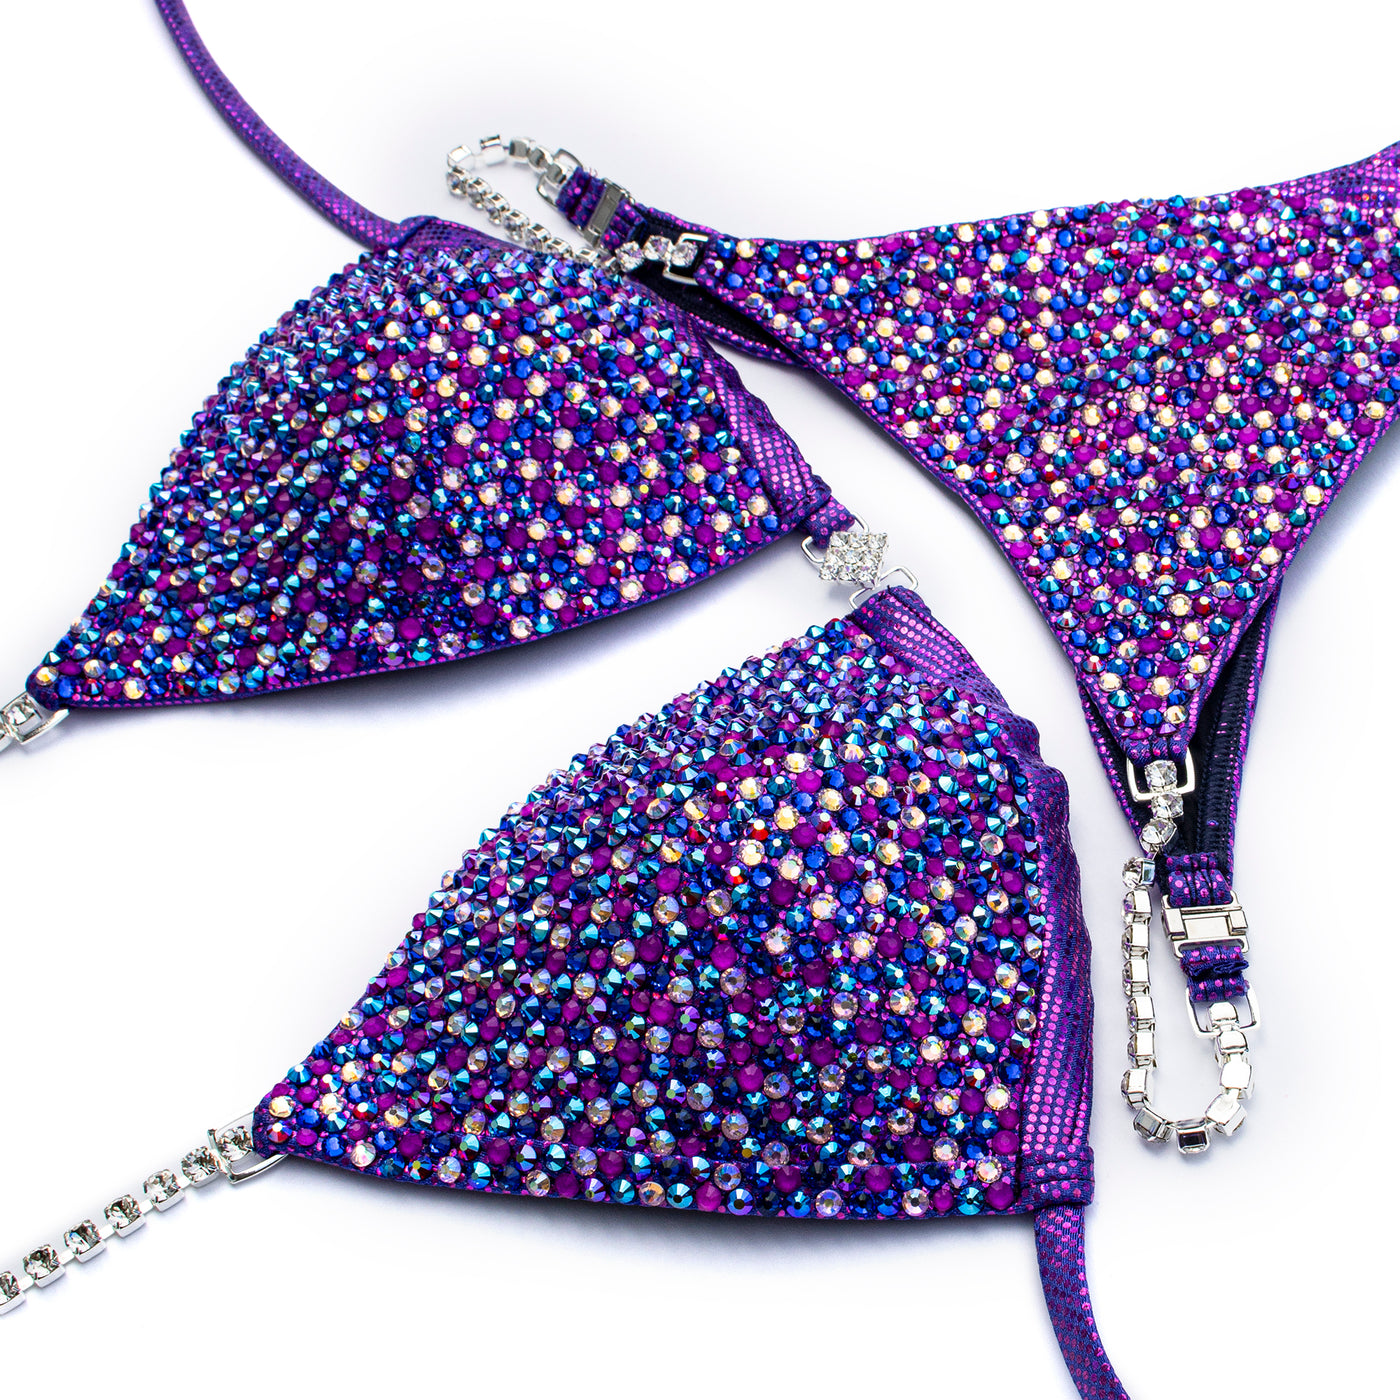 Purple Neon Scatter Competition Bikini | OMG Bikinis